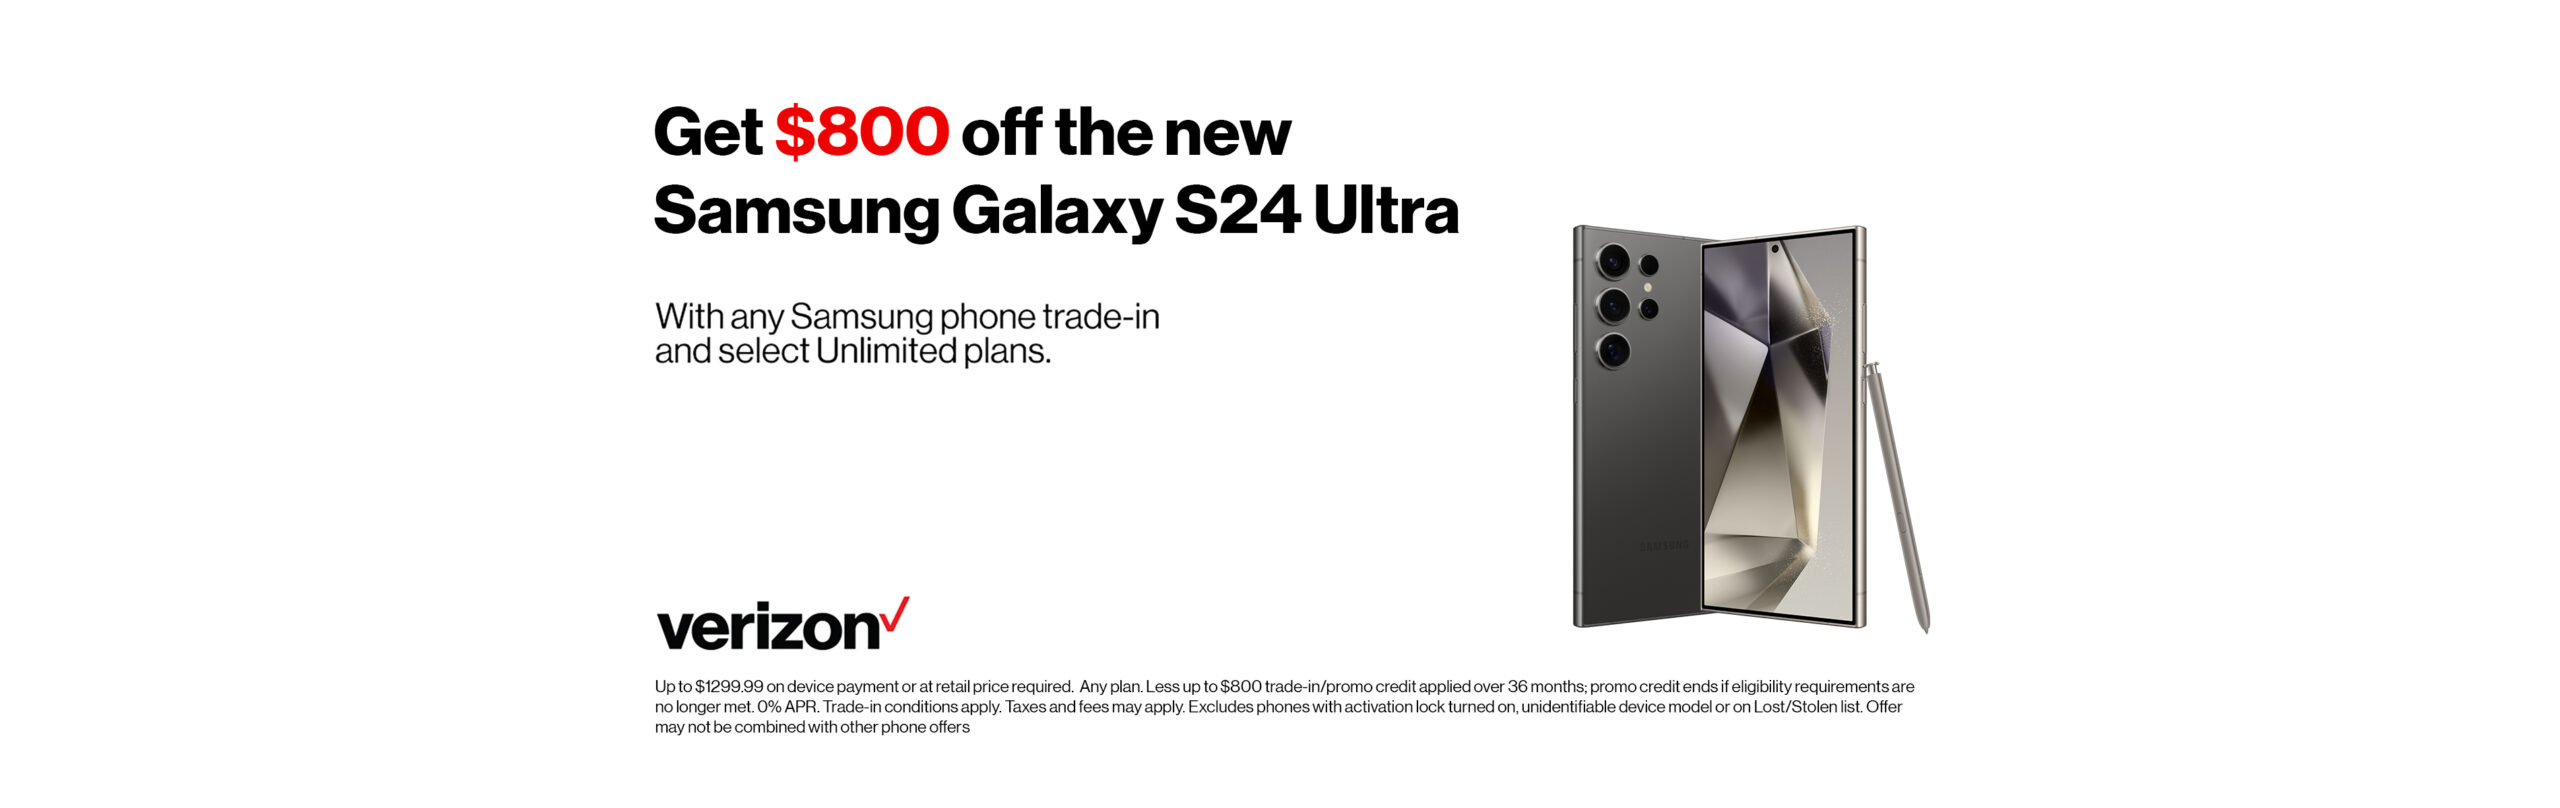 $800 off Samsung Galaxy S24